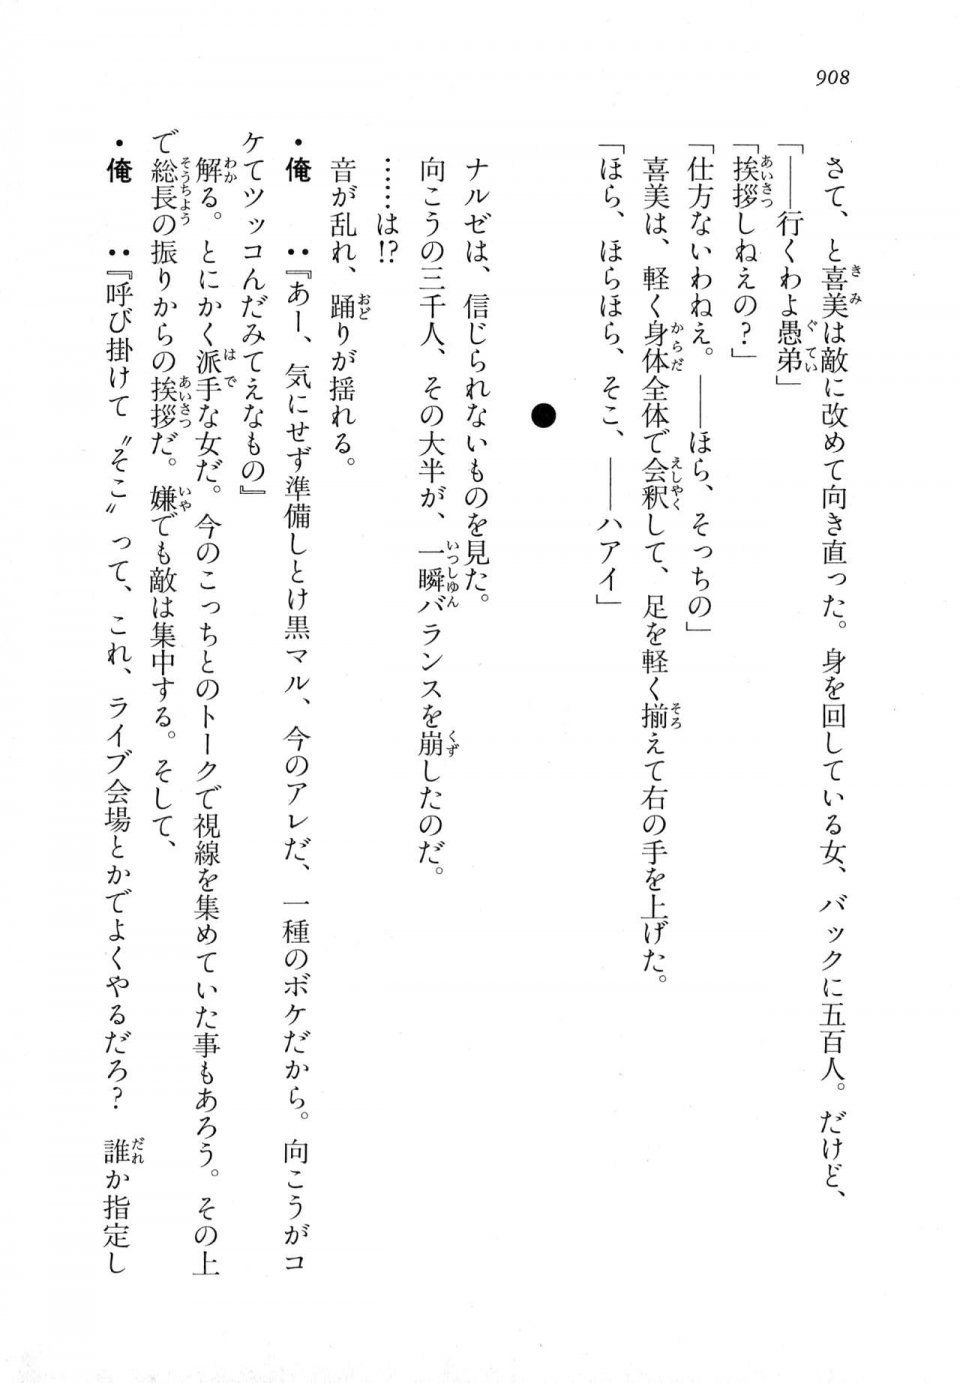 Kyoukai Senjou no Horizon LN Vol 18(7C) Part 2 - Photo #348